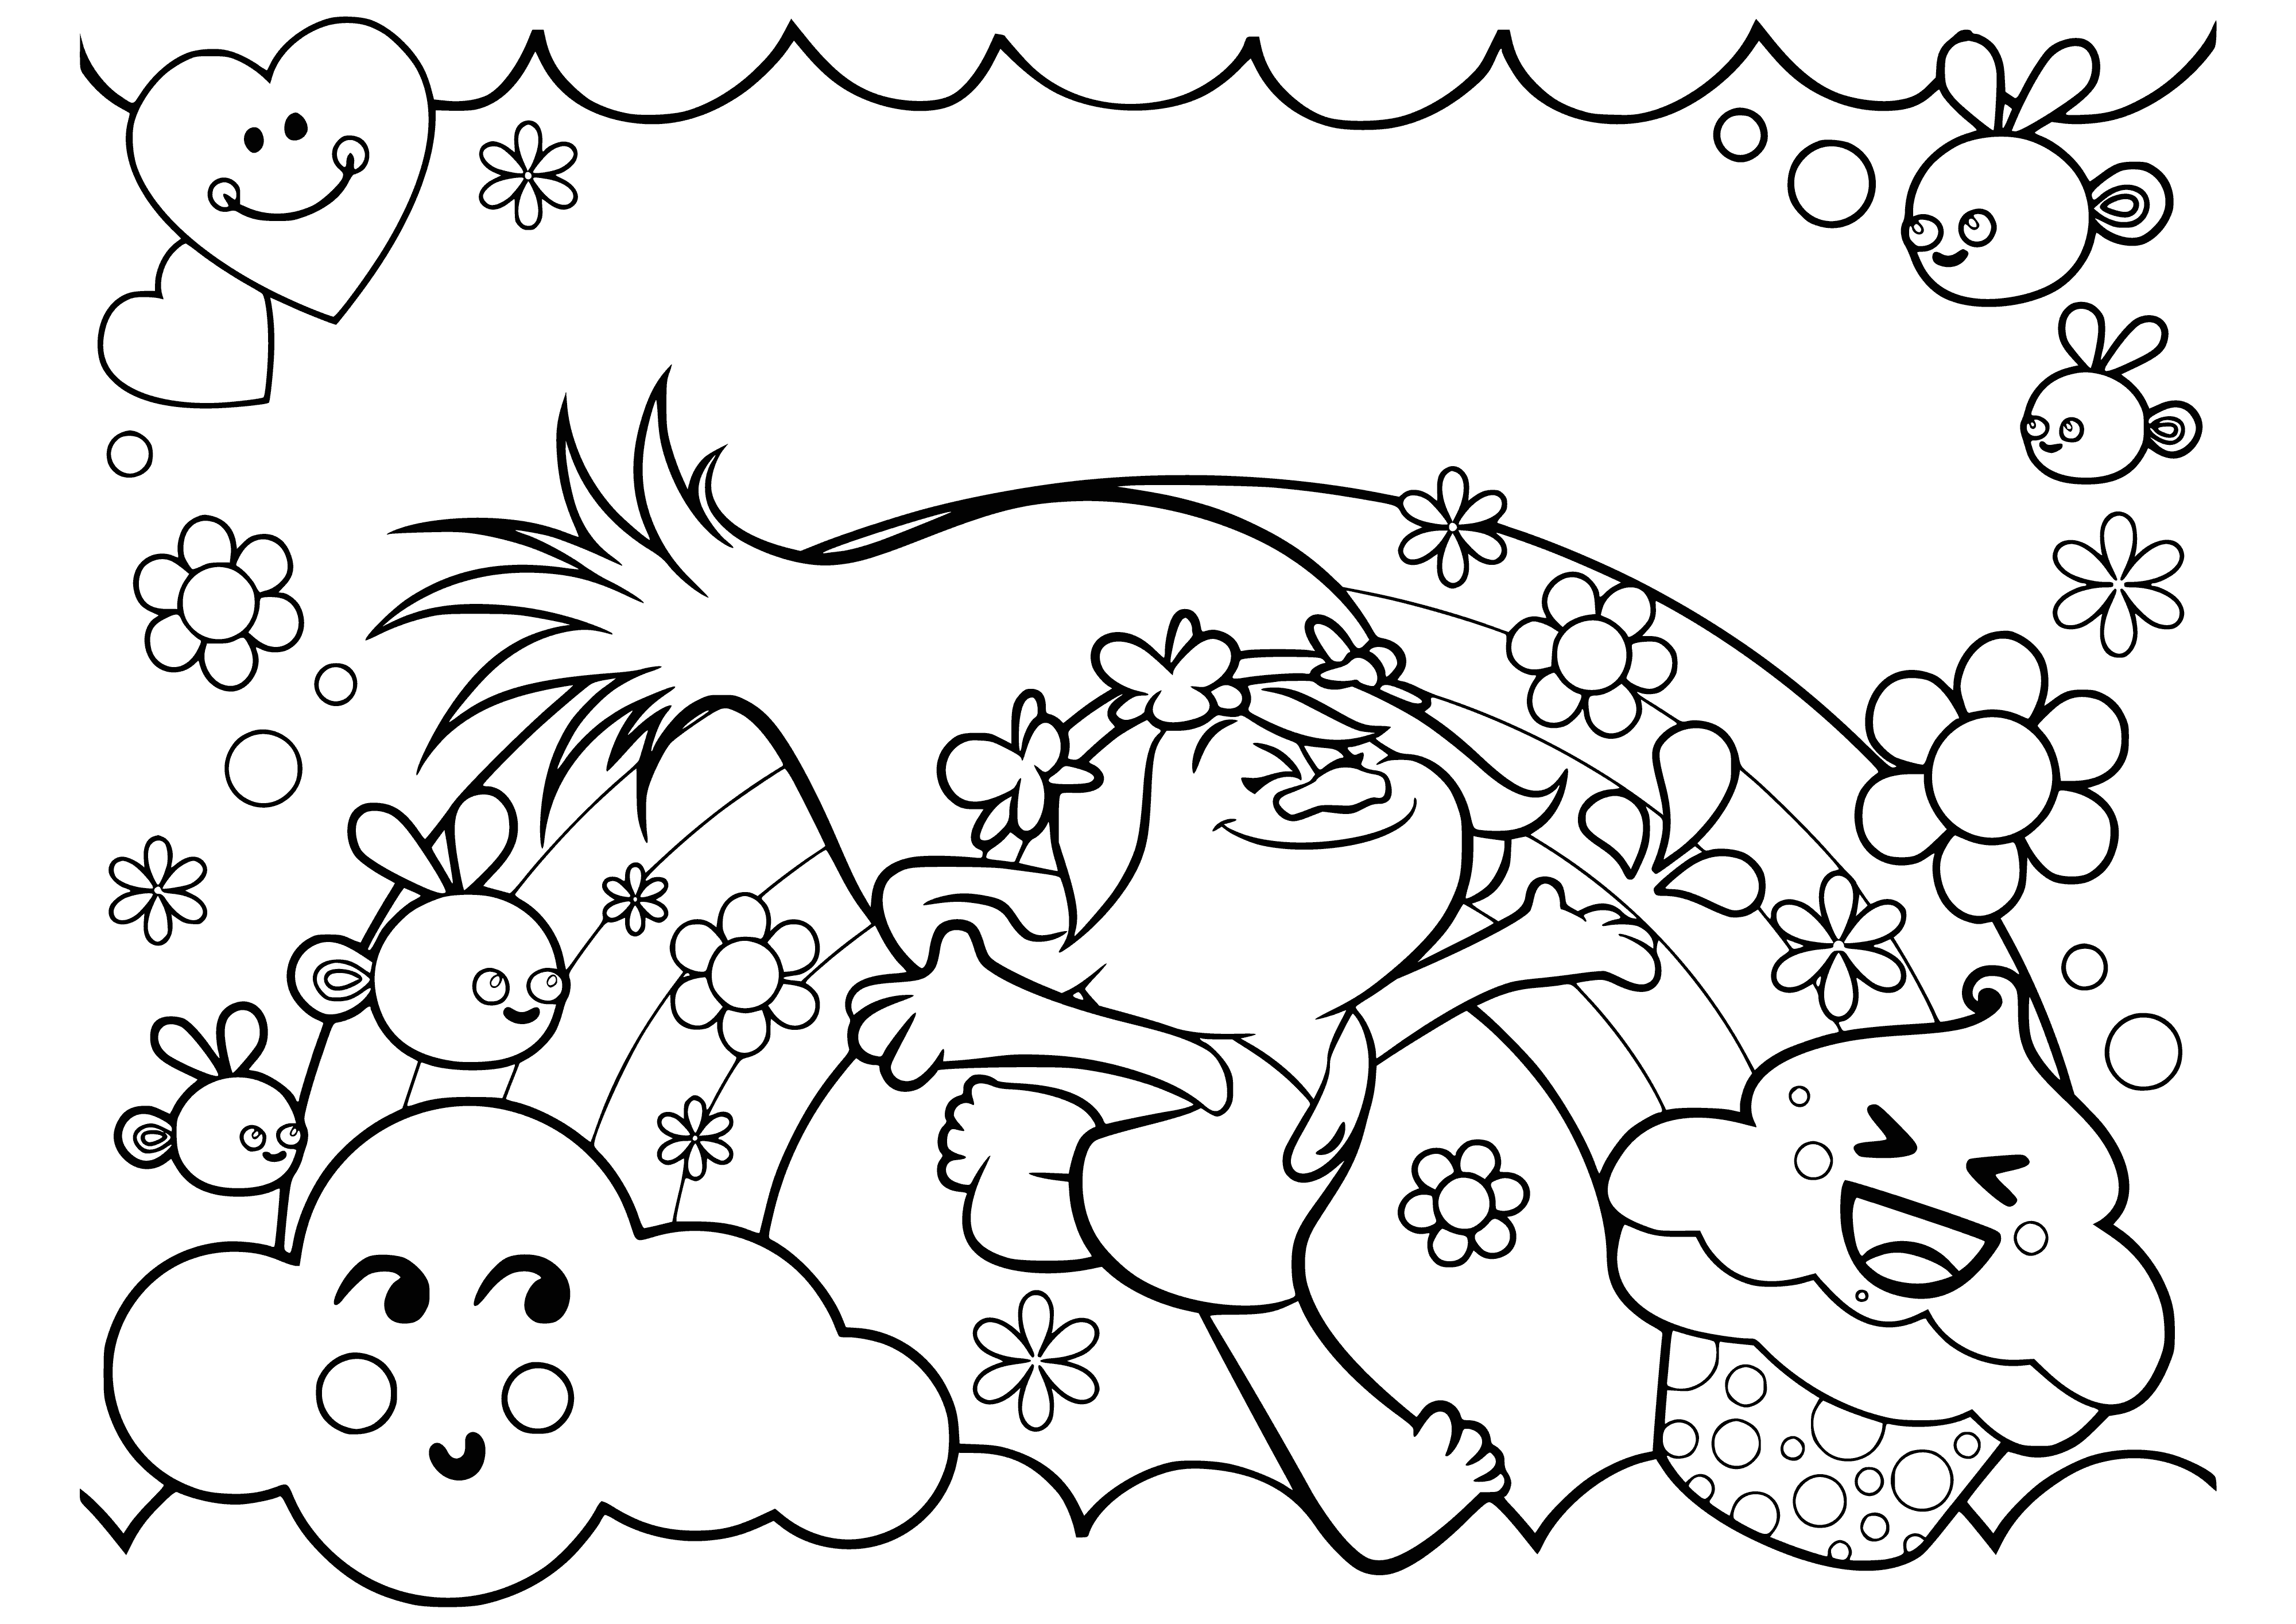 Princess Rosette coloring page